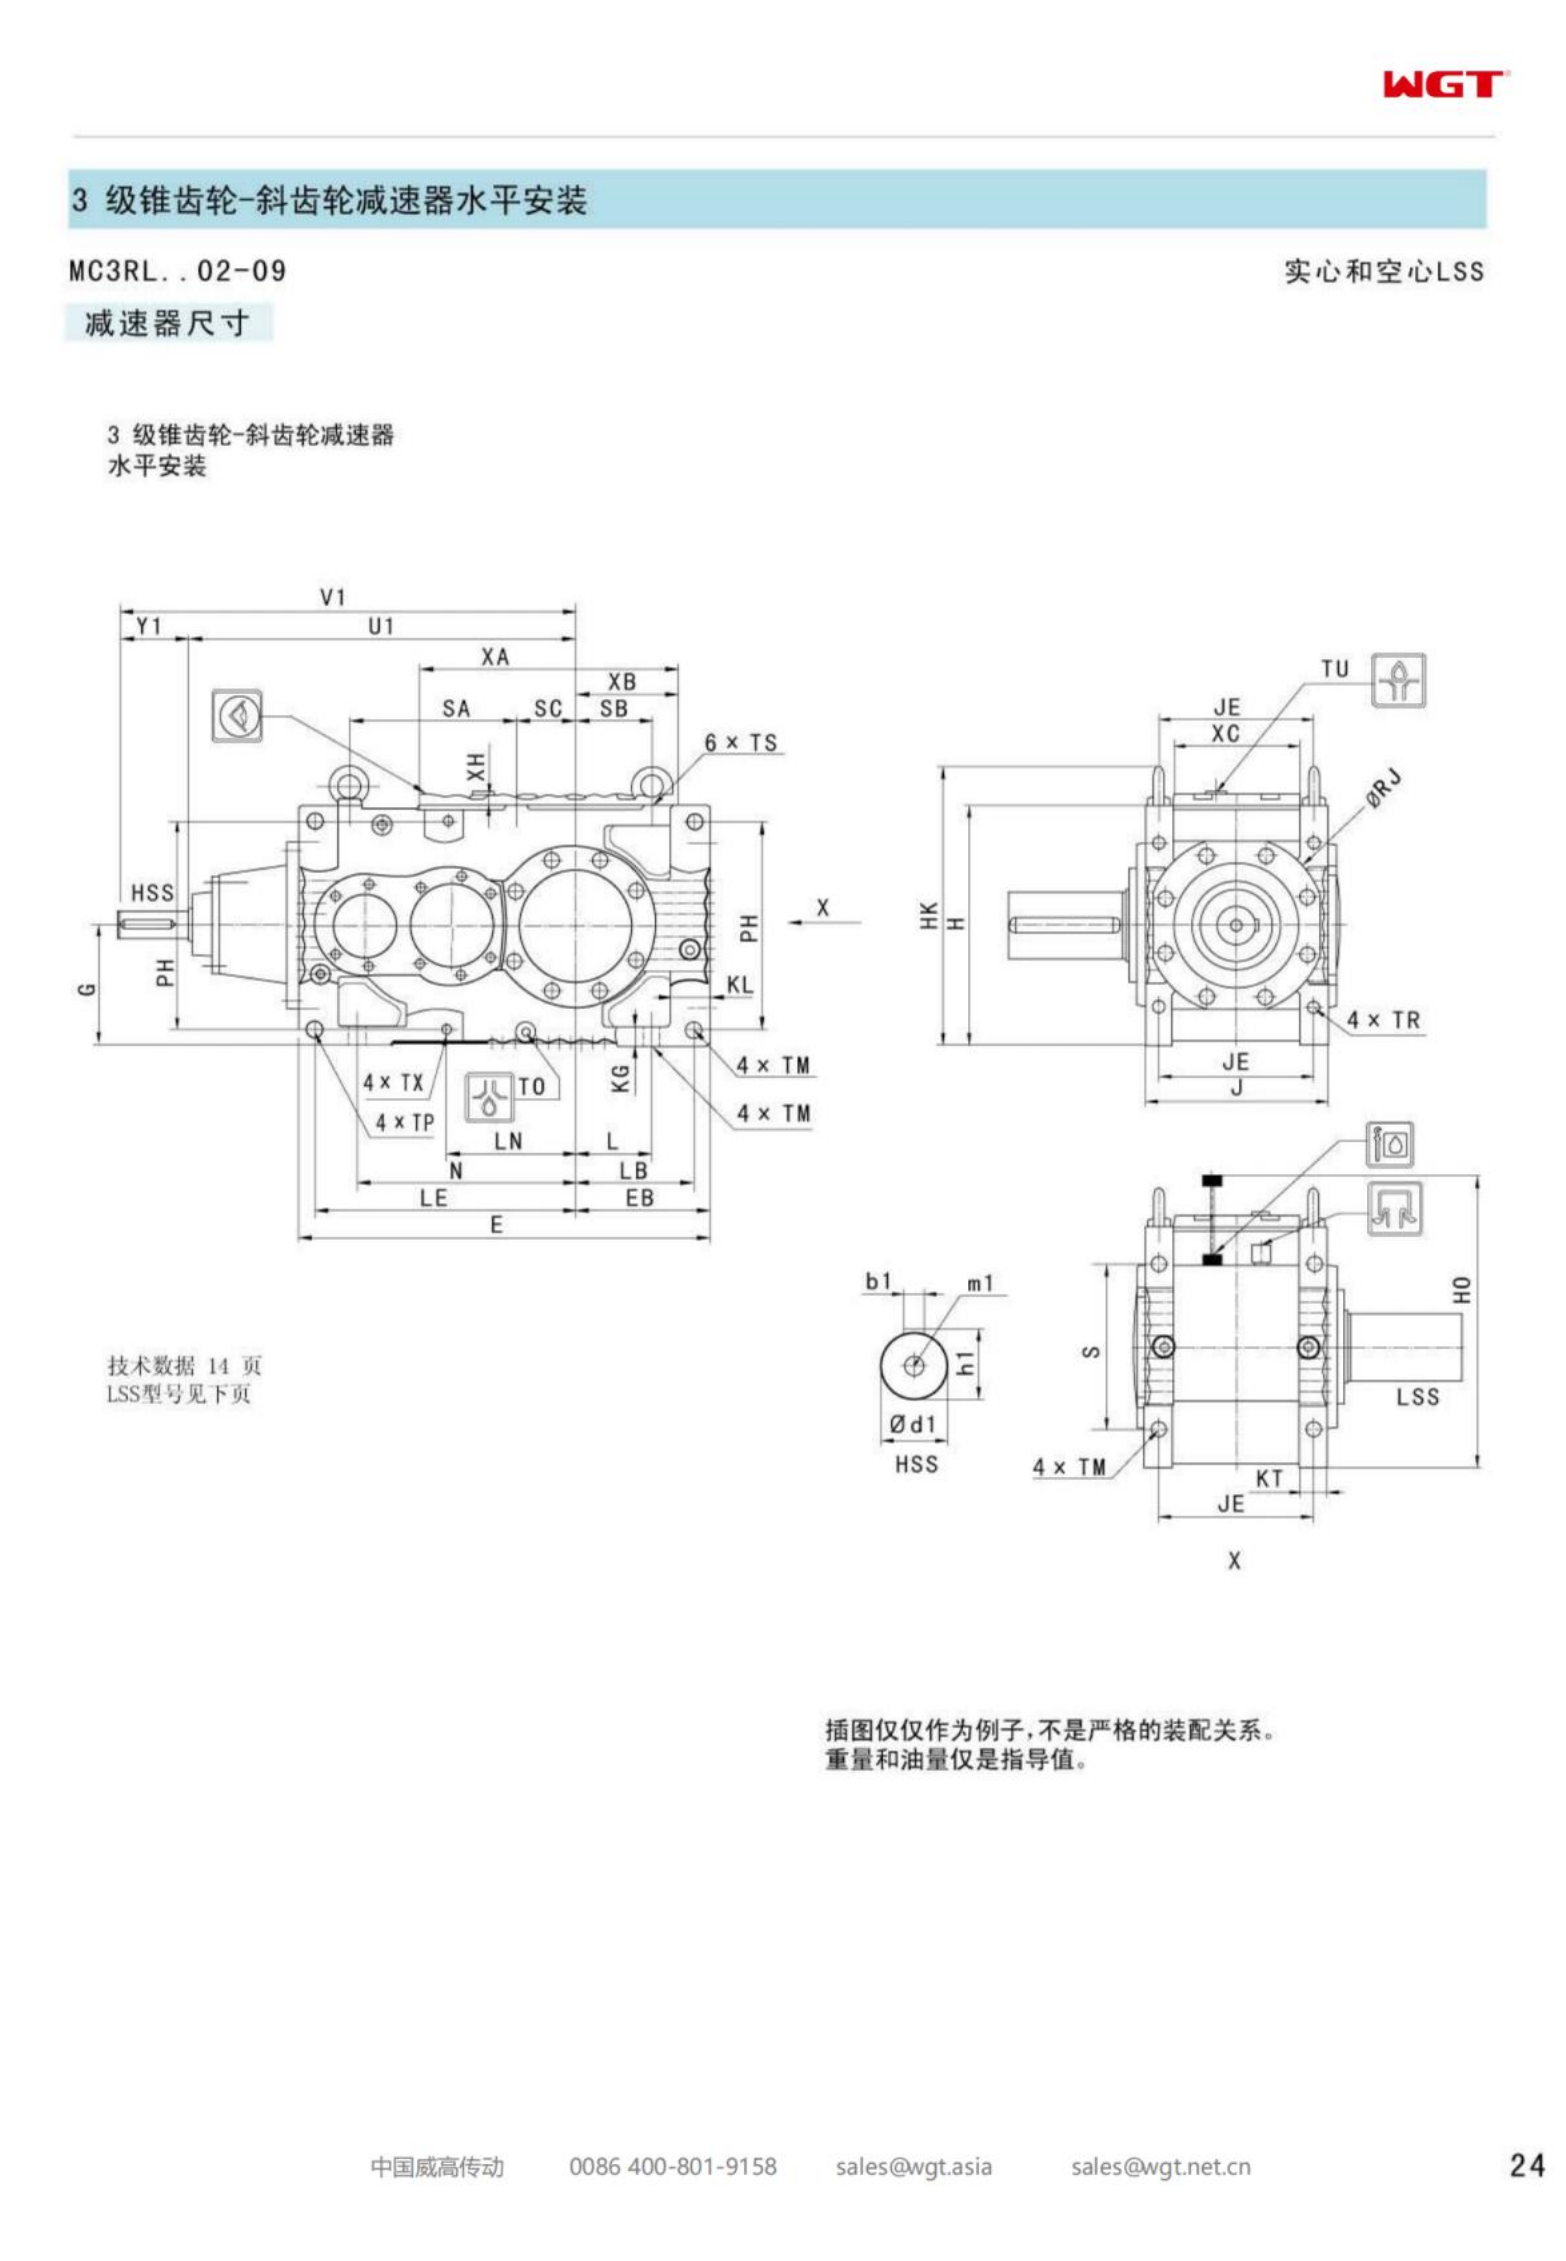 MC3RLSF07 replaces _SEW_MC_Series gearbox (patent)